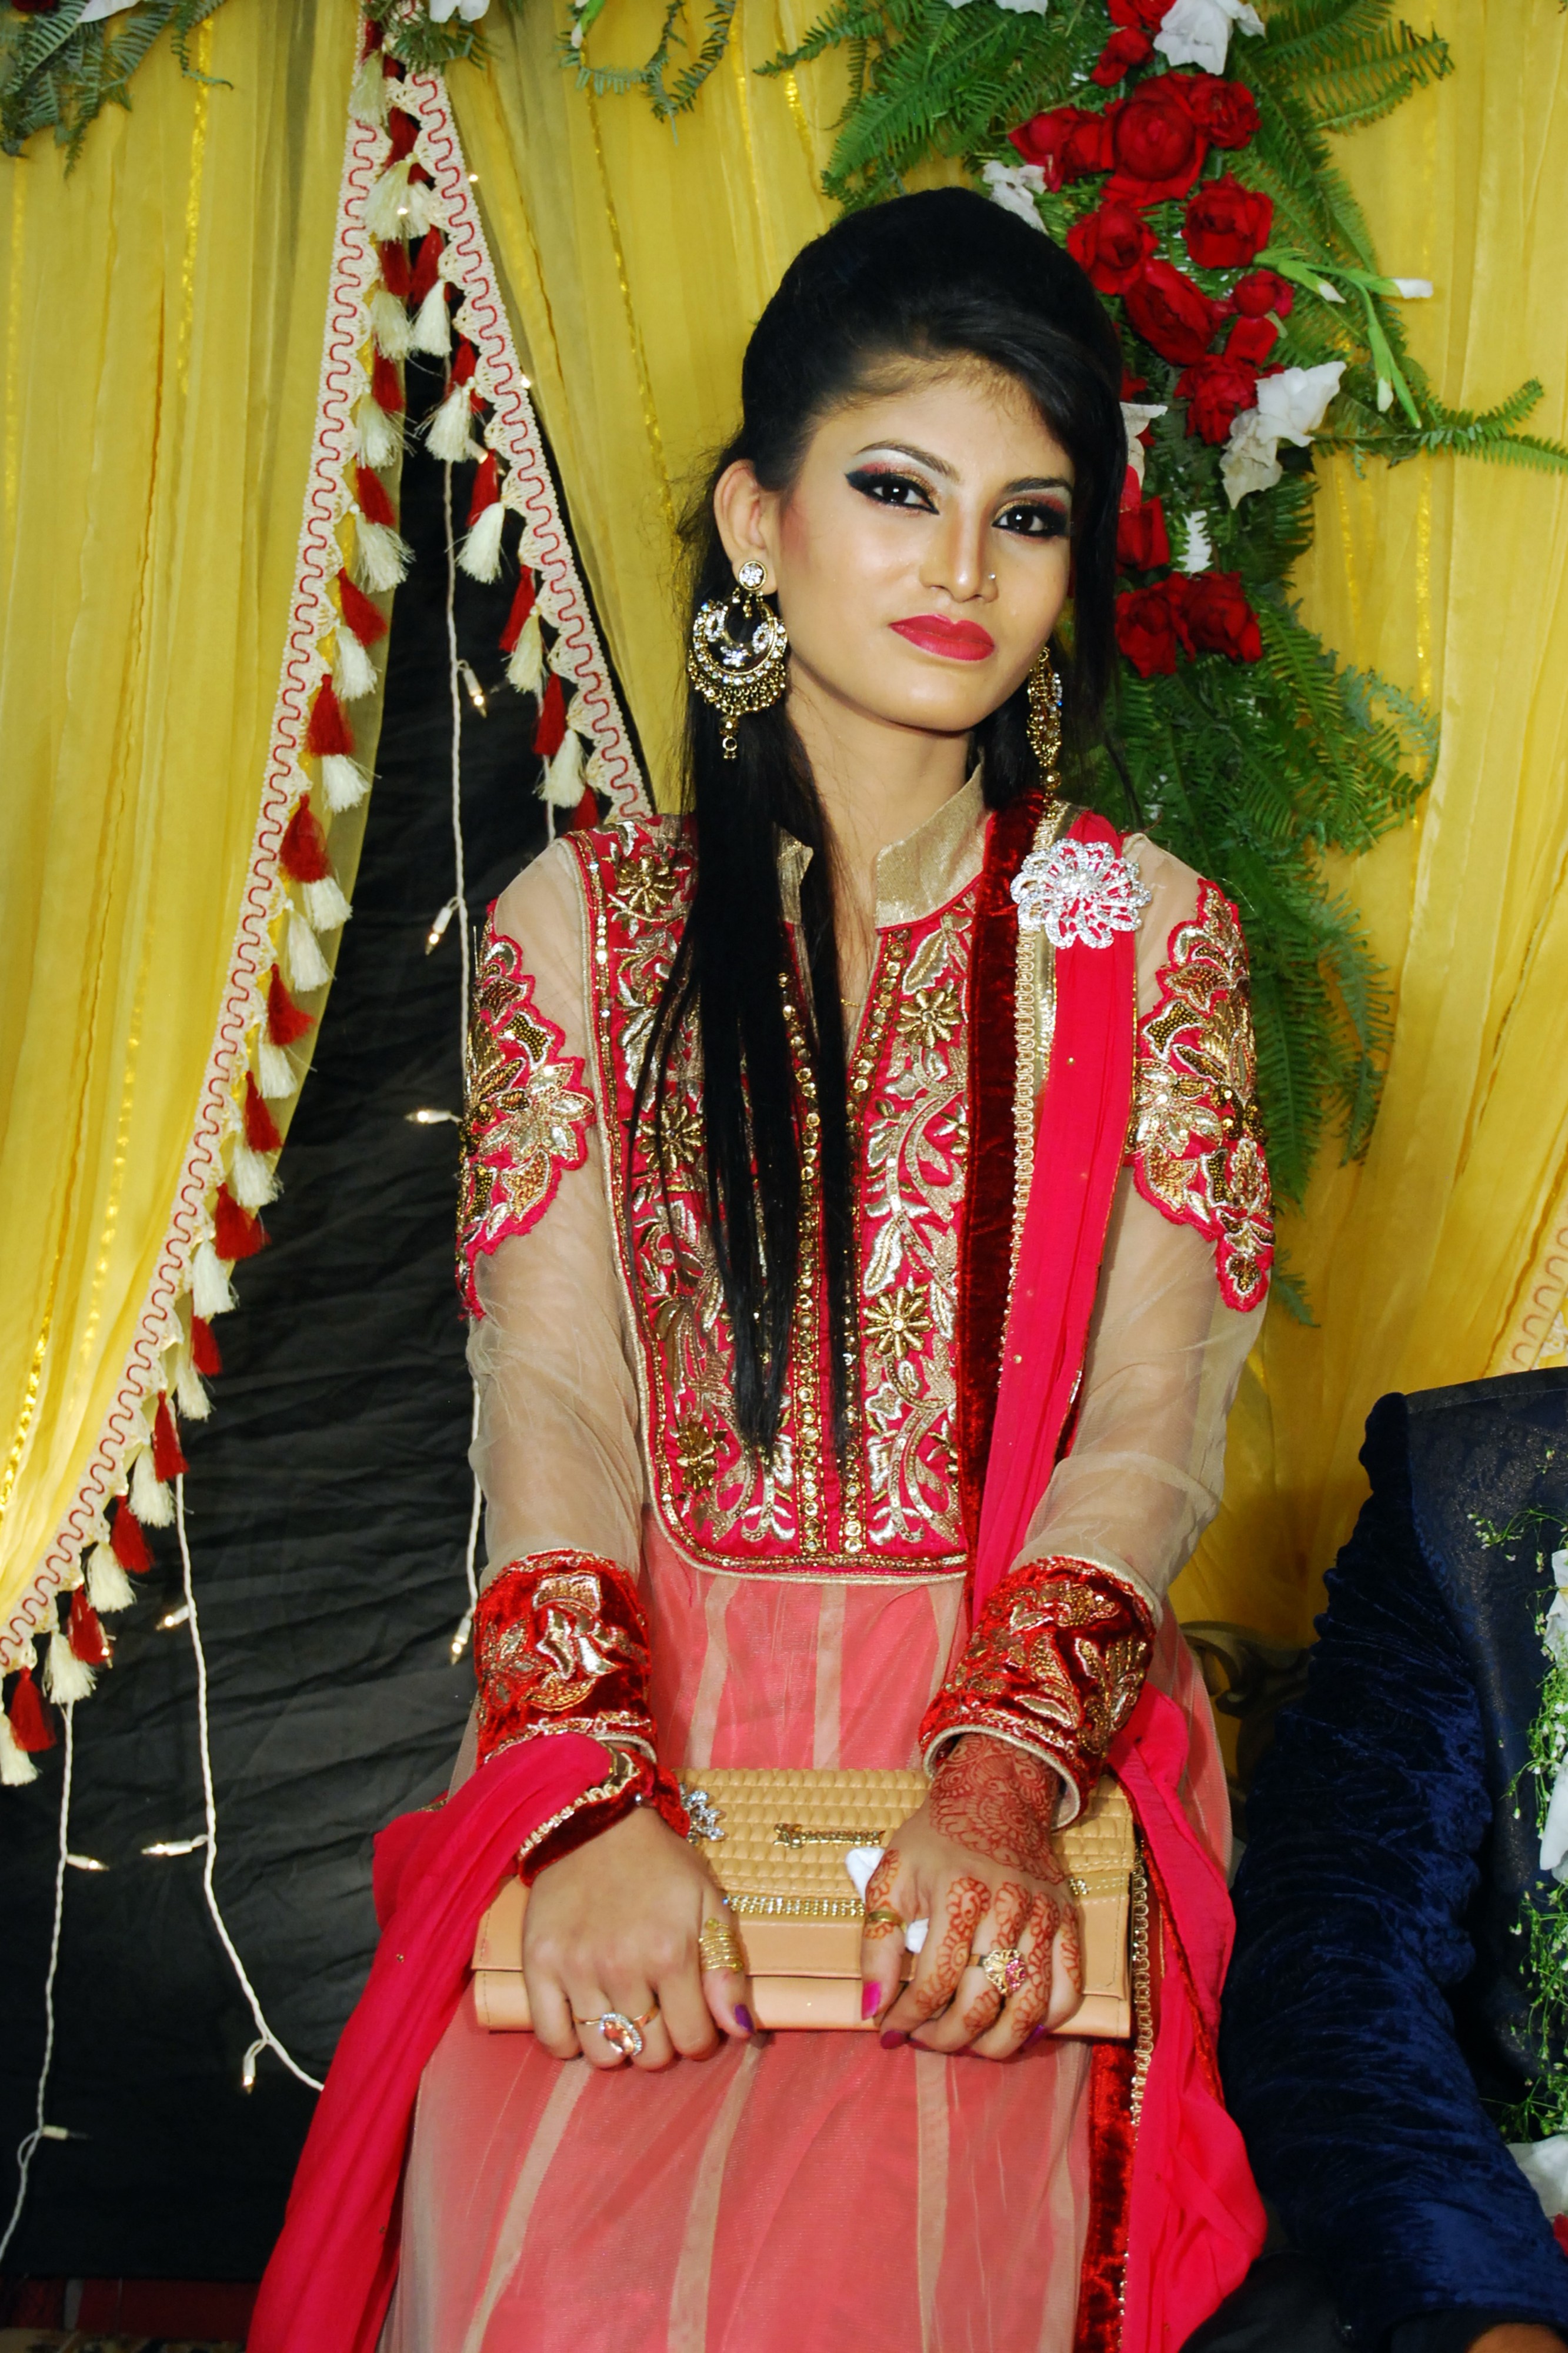 Bangladeshi woman in wedding celebration at Chittagong (01)